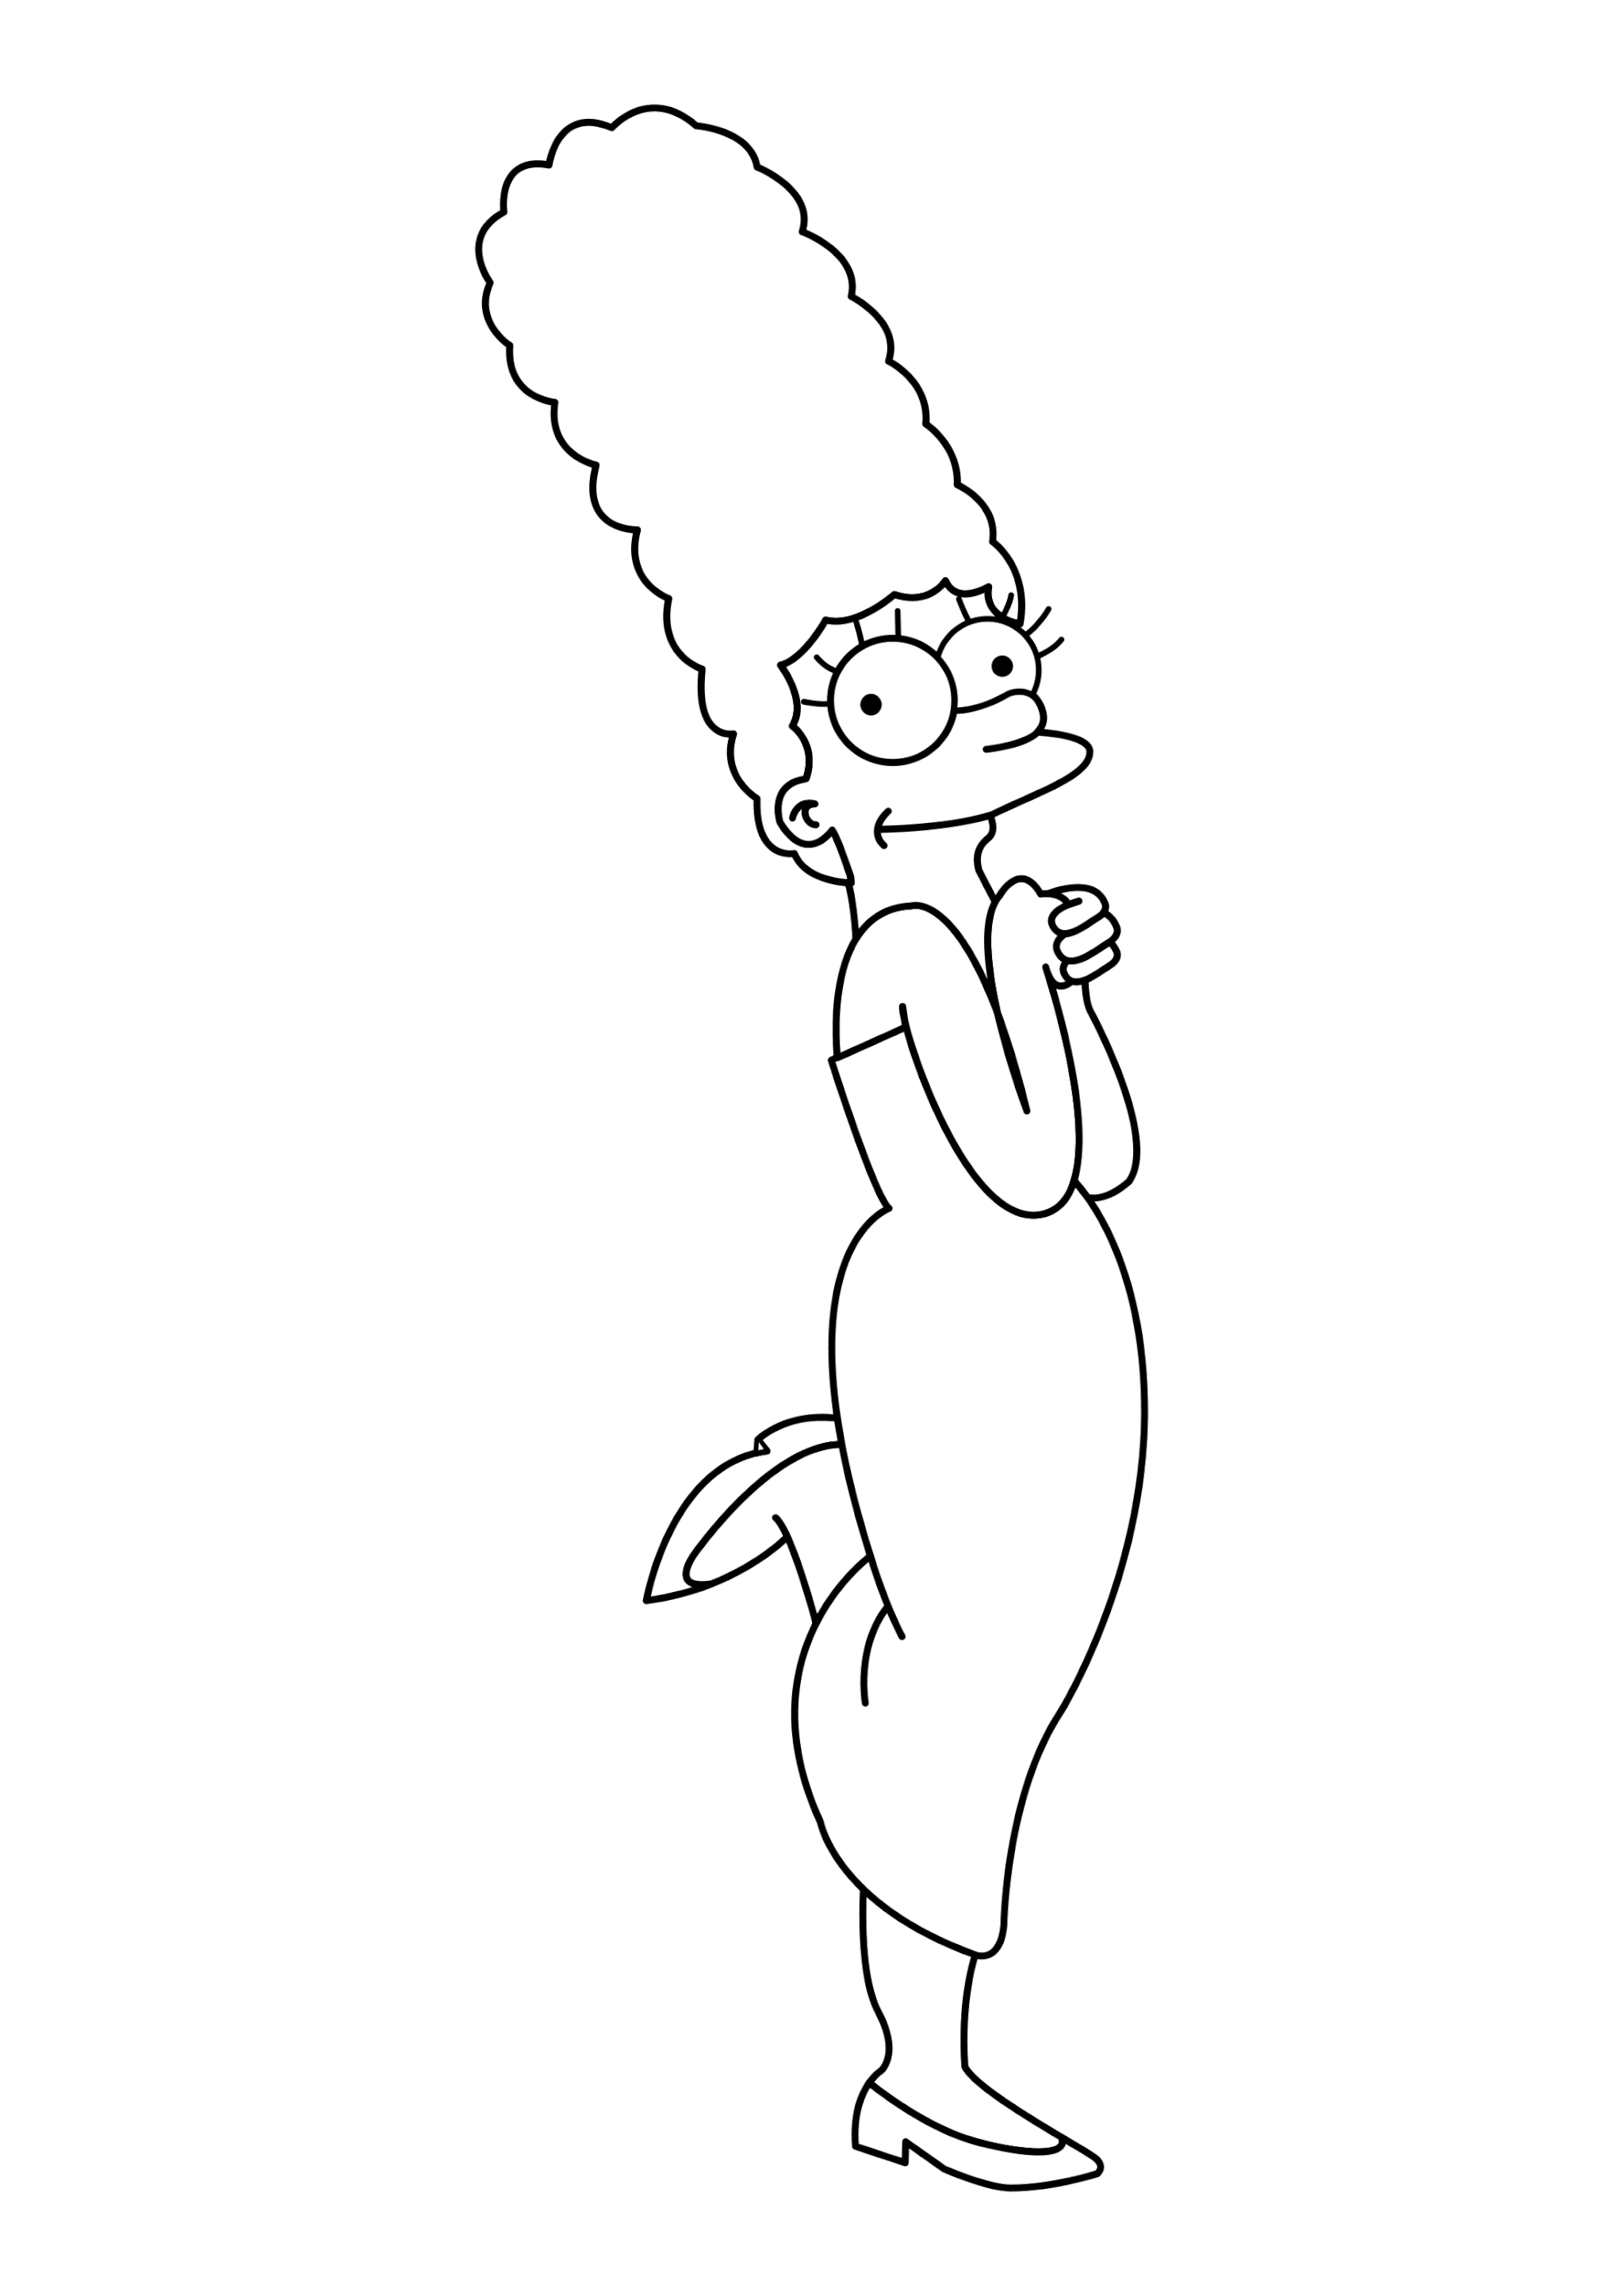 Мардж симпсон рисунок карандашом